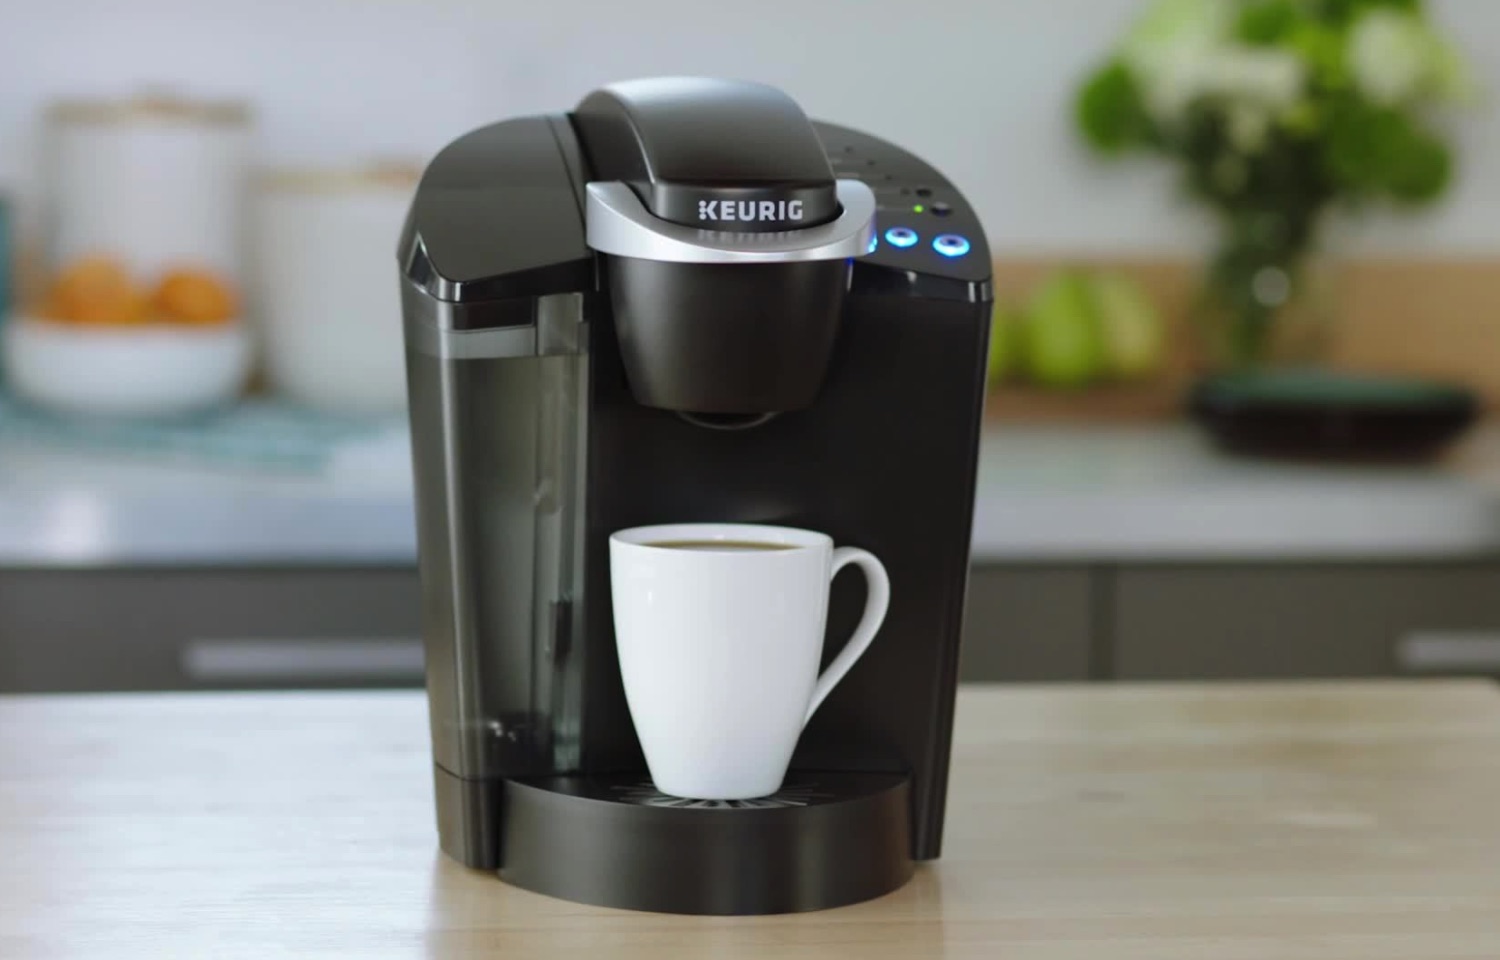 https://www.digitaltrends.com/wp-content/uploads/2020/10/keurig-k-classic-coffee-maker.jpg?fit=720%2C460&p=1